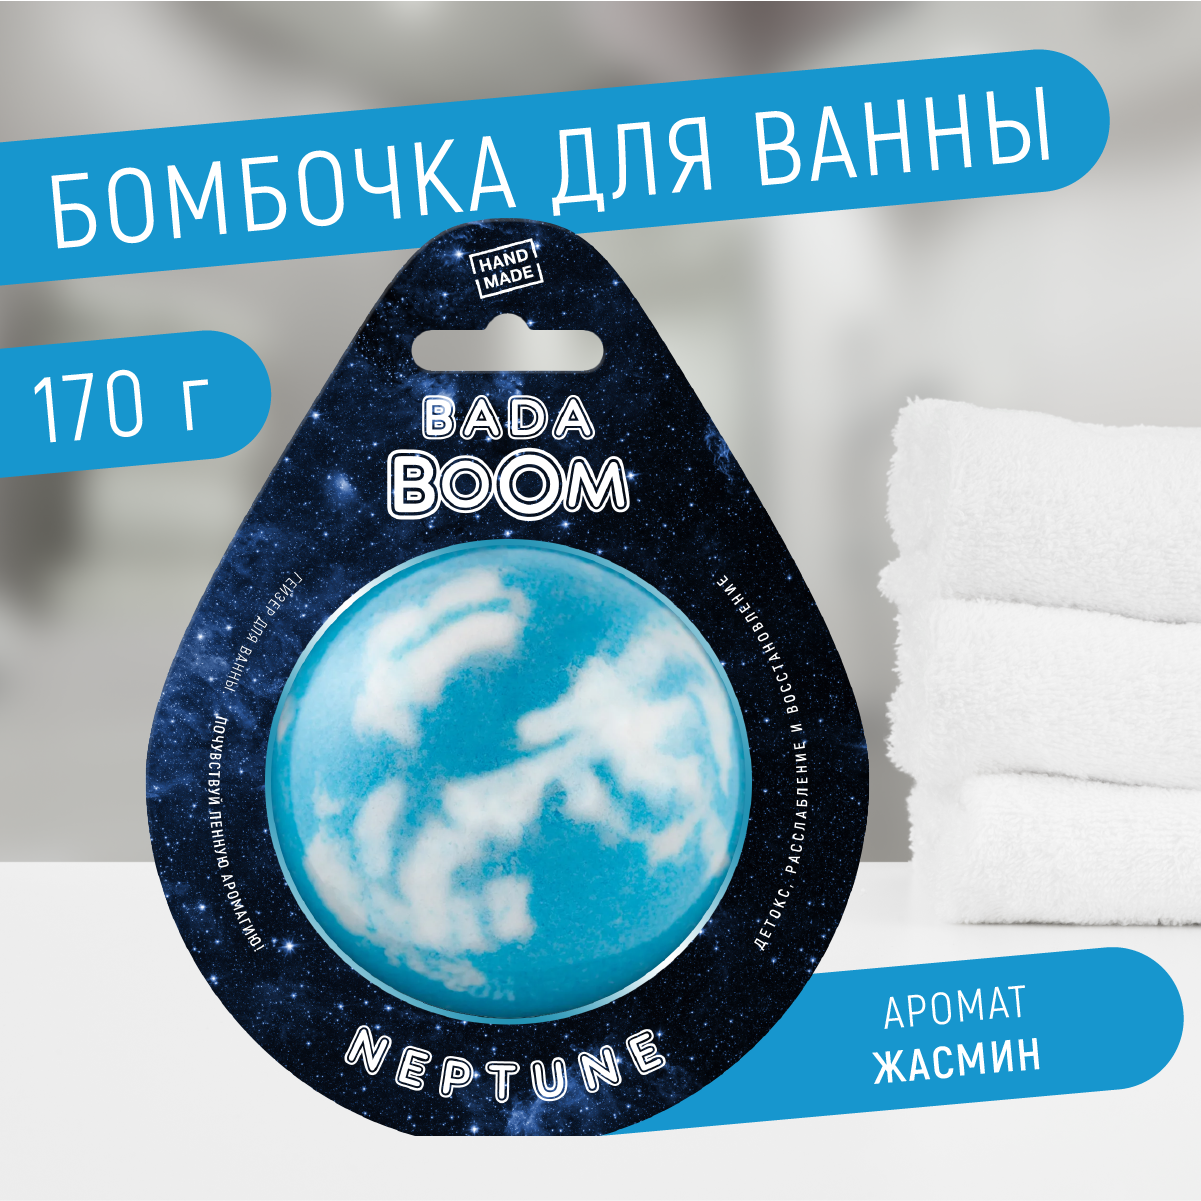 Бомбочка для ванны BADA BOOM Neptune жасмин 170 г boom shop cosmetics бомба для ванны самая милая 250 0